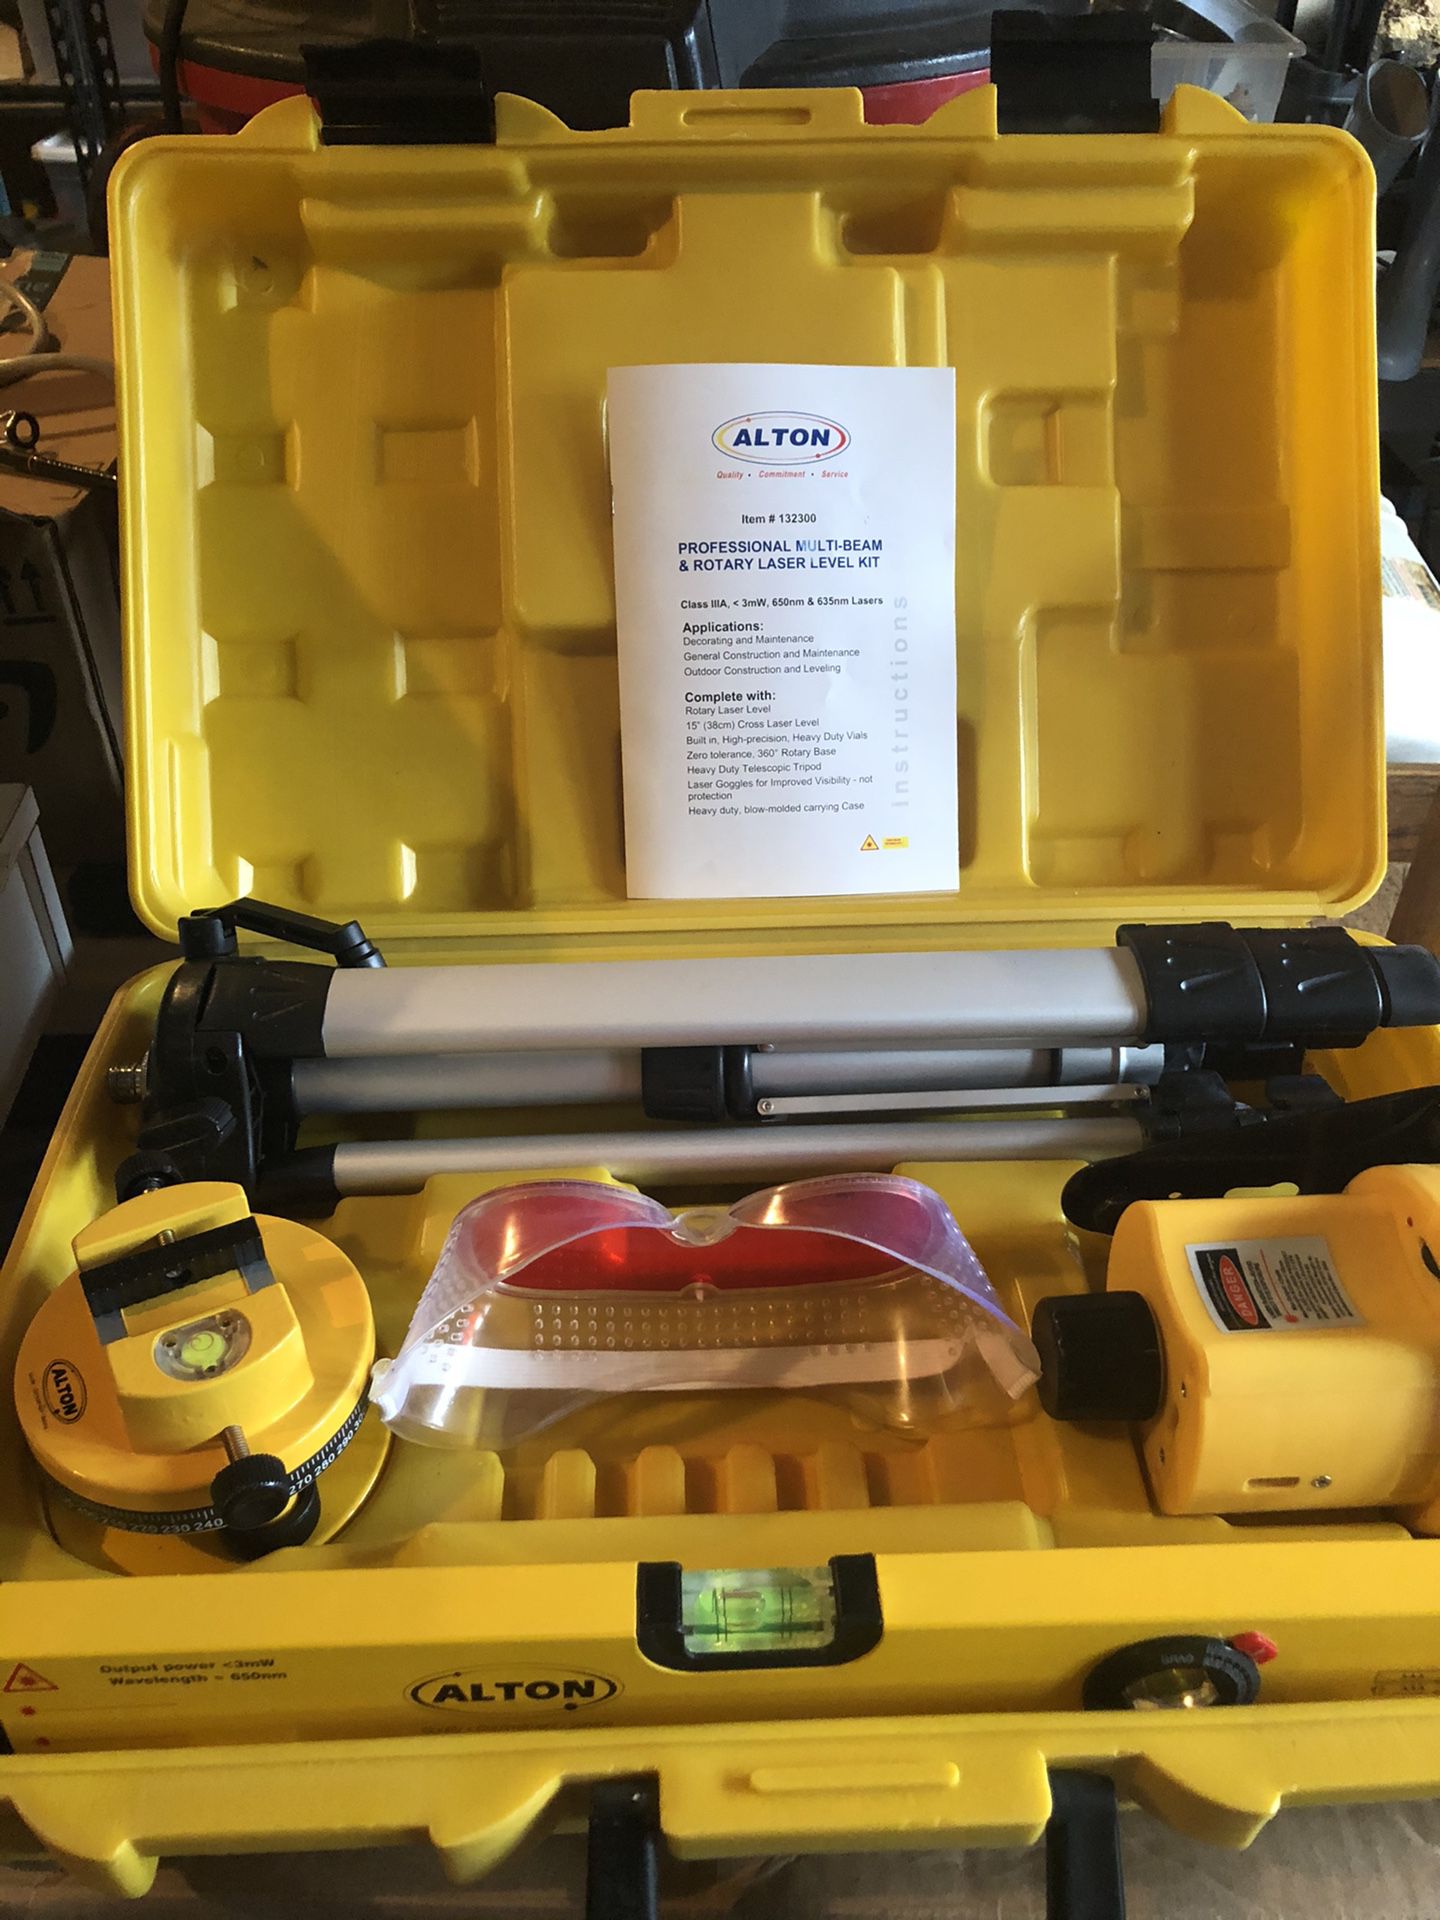 Alton Professional multi beam & rotary laser level kit